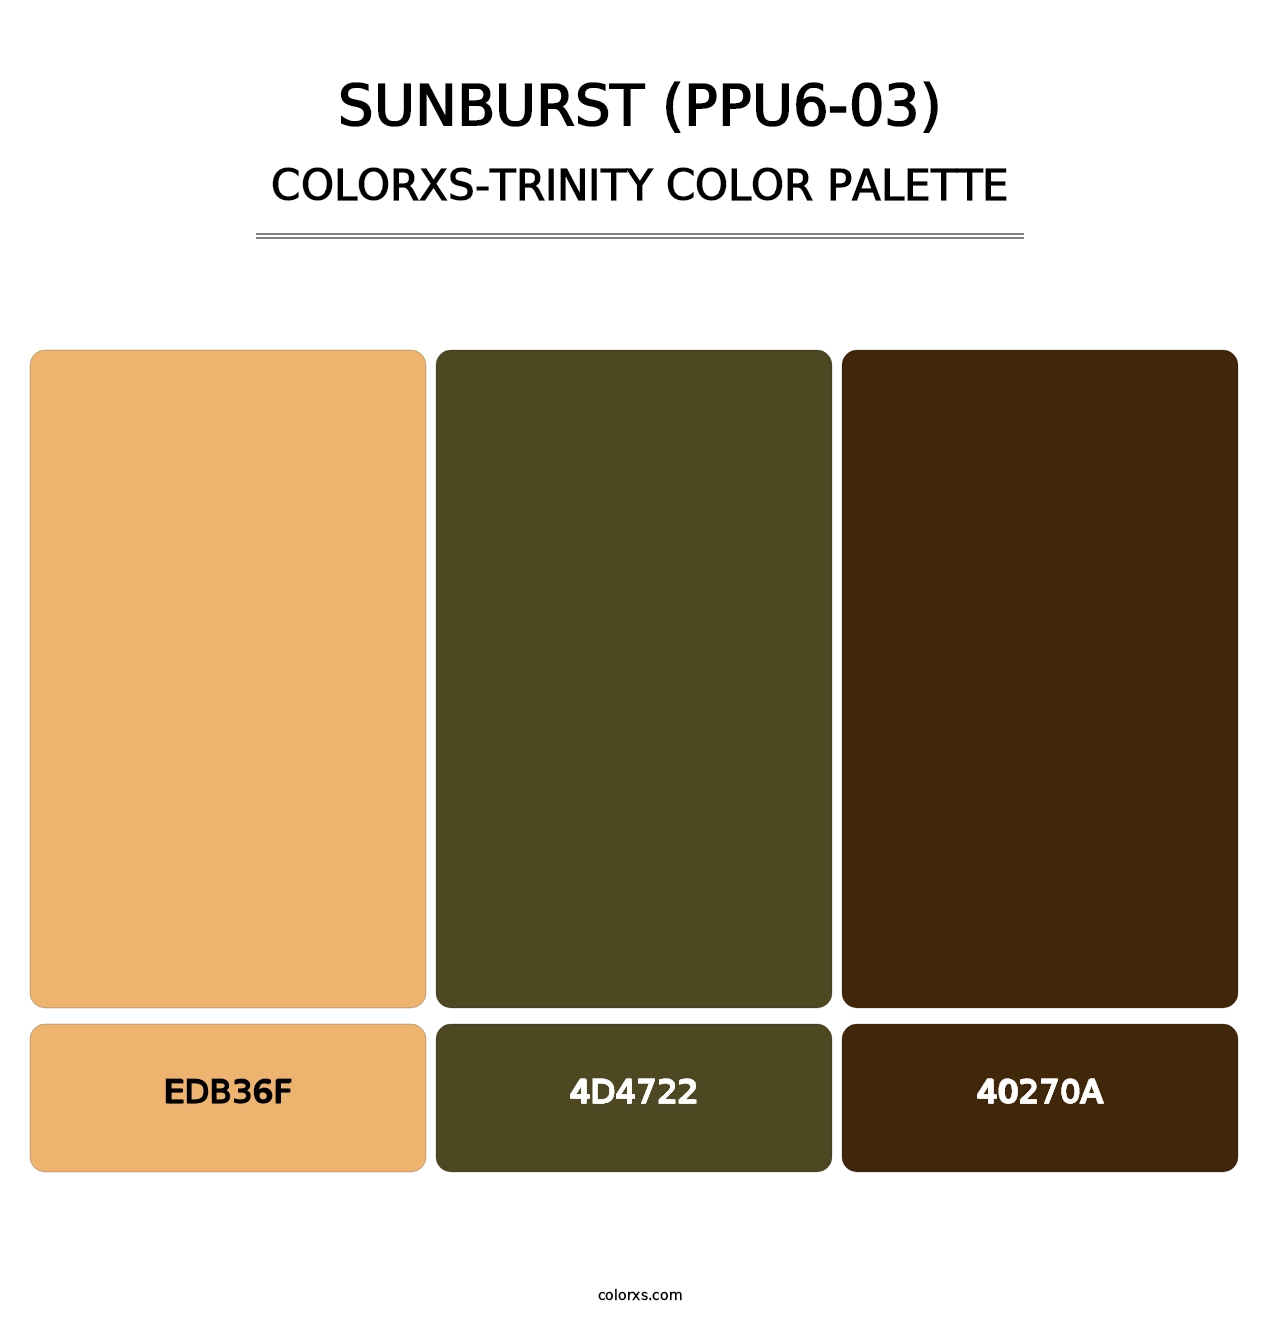 Sunburst (PPU6-03) - Colorxs Trinity Palette